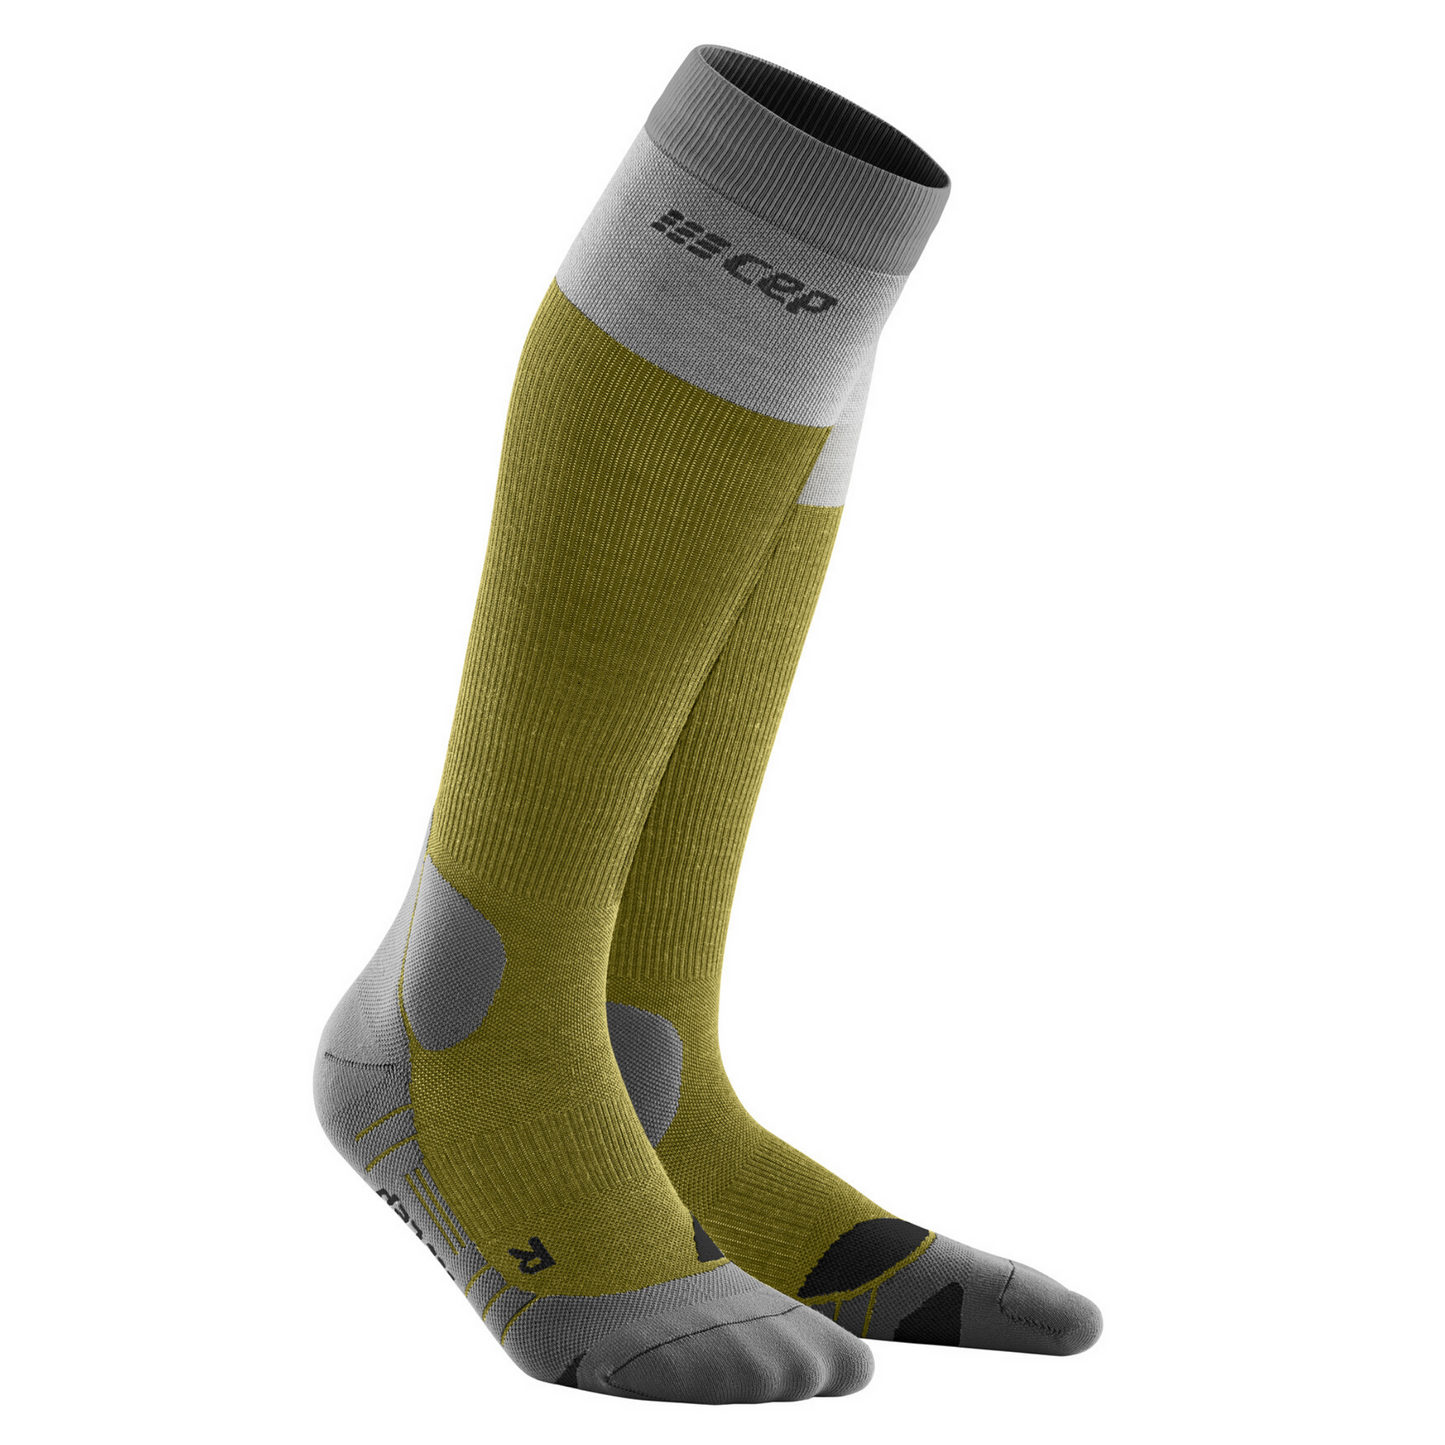 Men Light Outdoor CEP Knee high 20-30 mmHg Merino Compression Socks